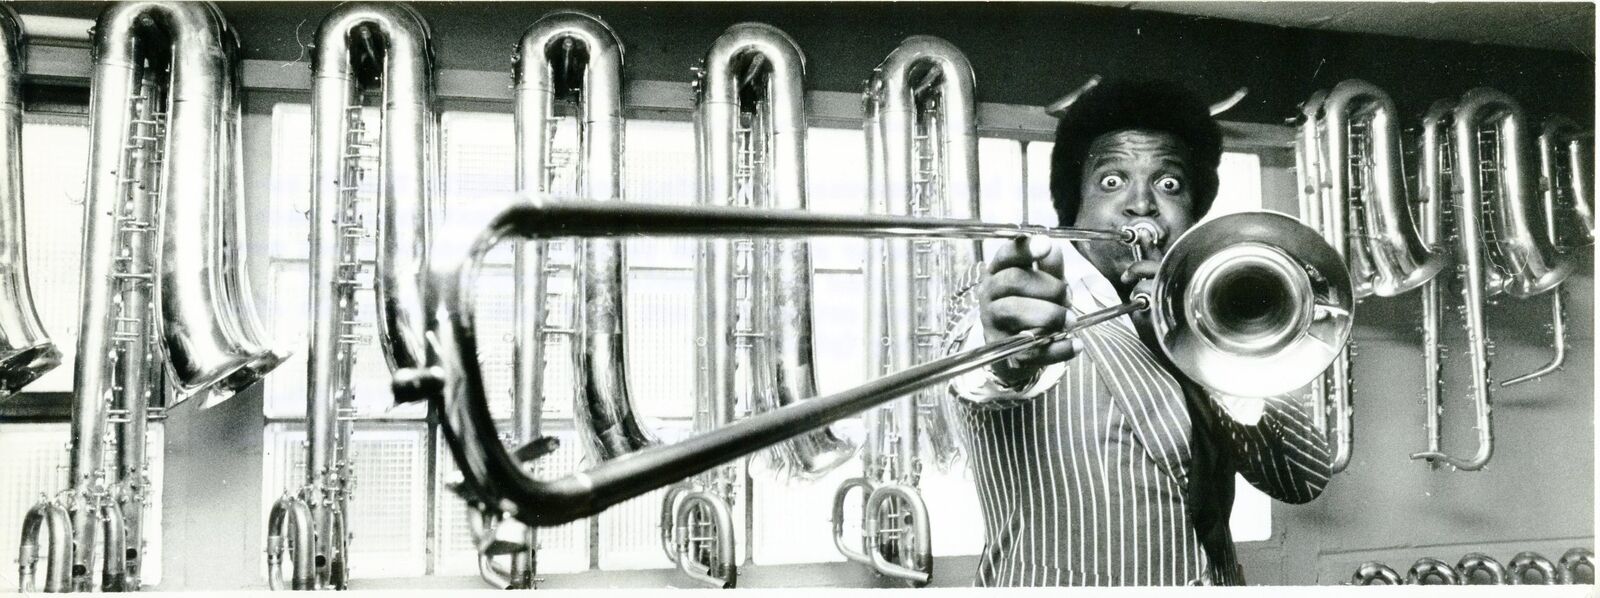 Roberto Blanco (entertainer): At The Trombone Factory, Original Press Photograph